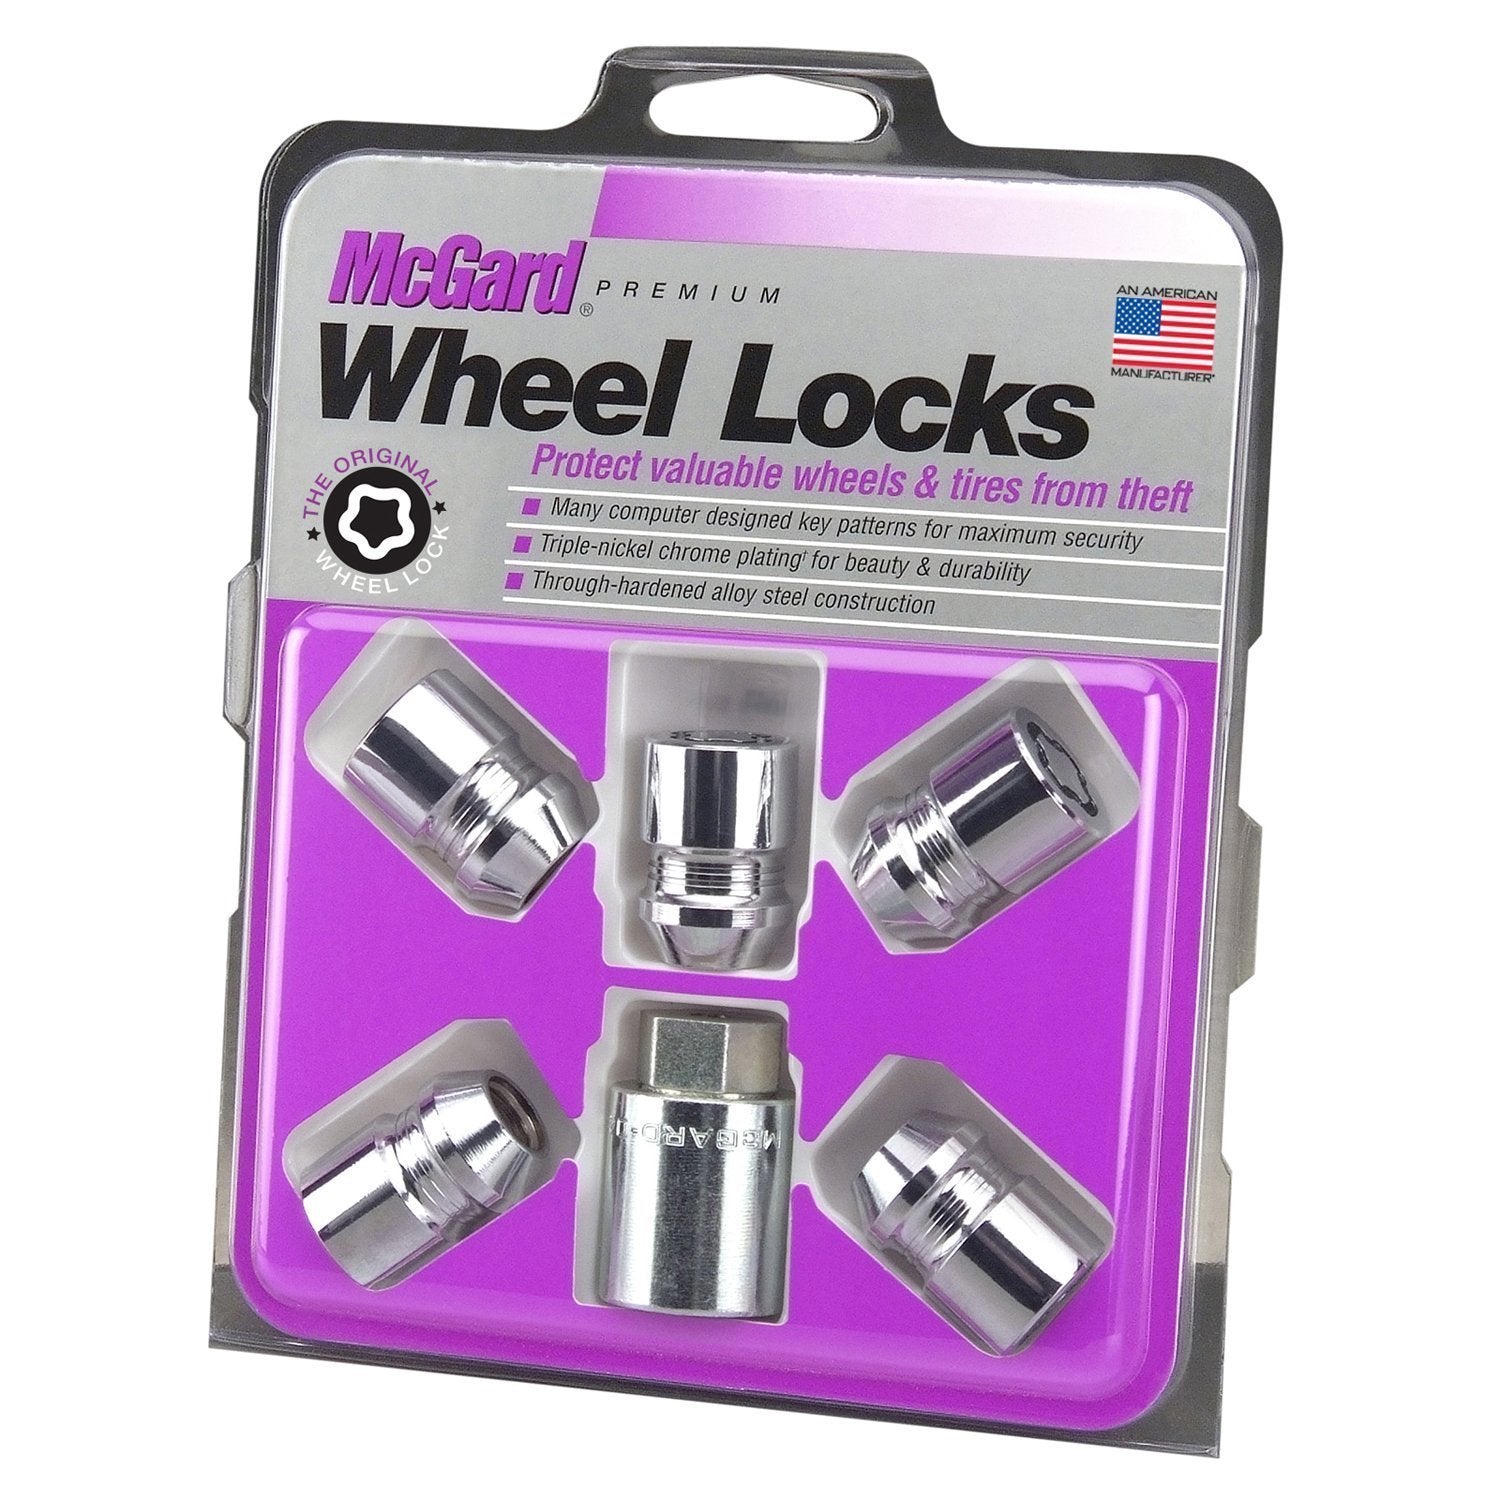 McGard, McGard Cone Seat Exposed Style Wheel Locks / Chrome / 5 Lock Set (24554)